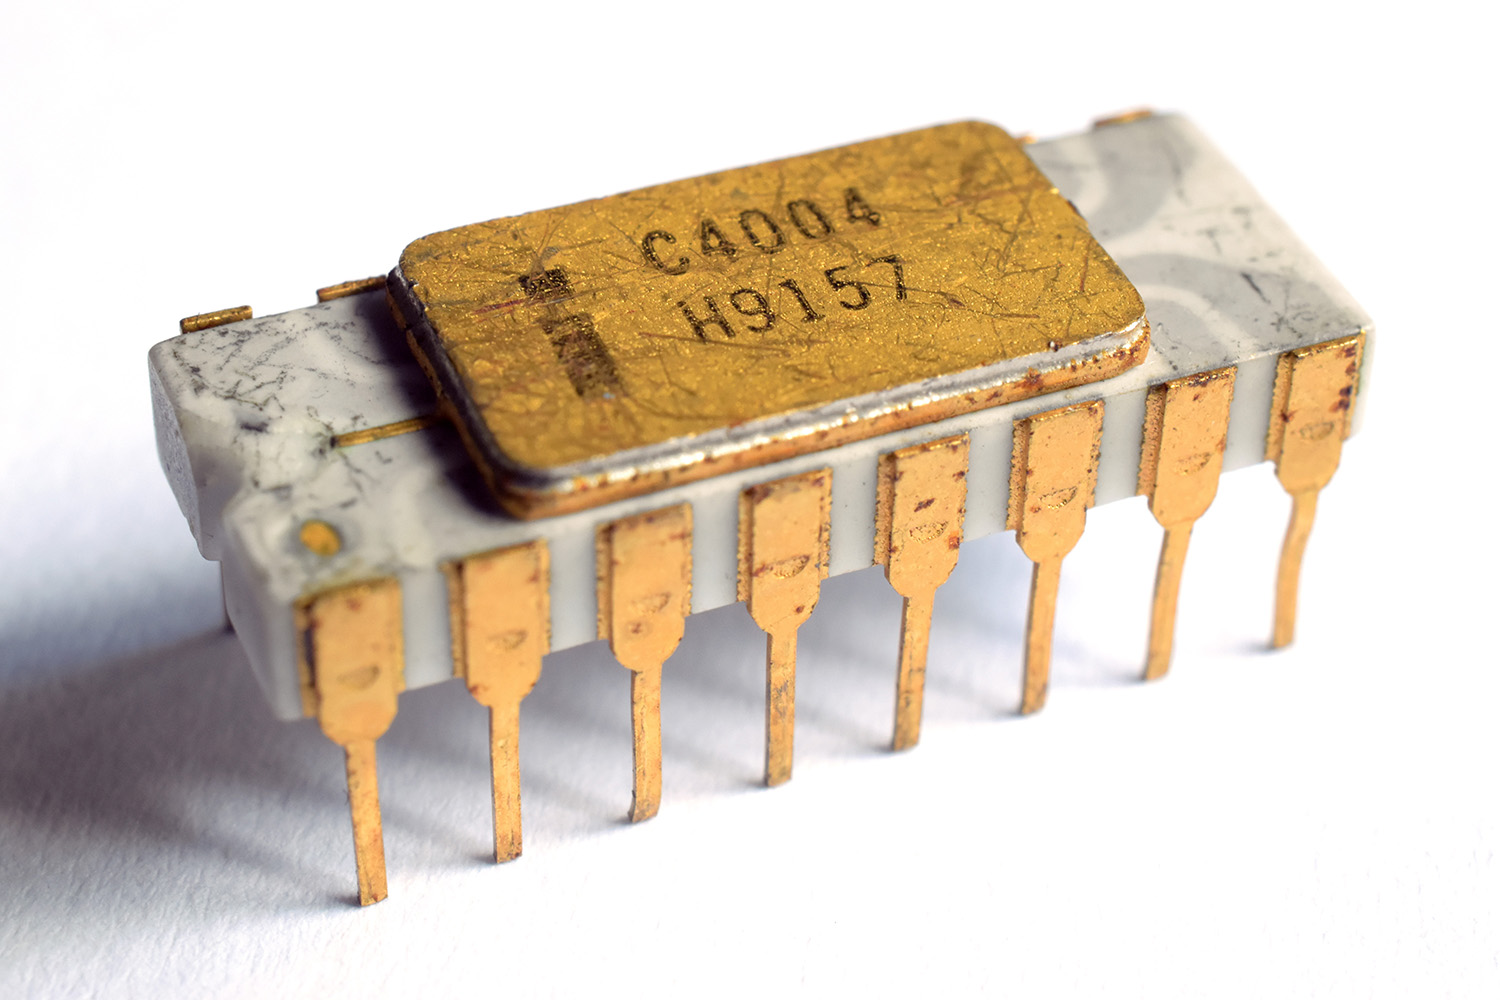 Intel 4004 microprocessor. Photo: Thomas Nguyen